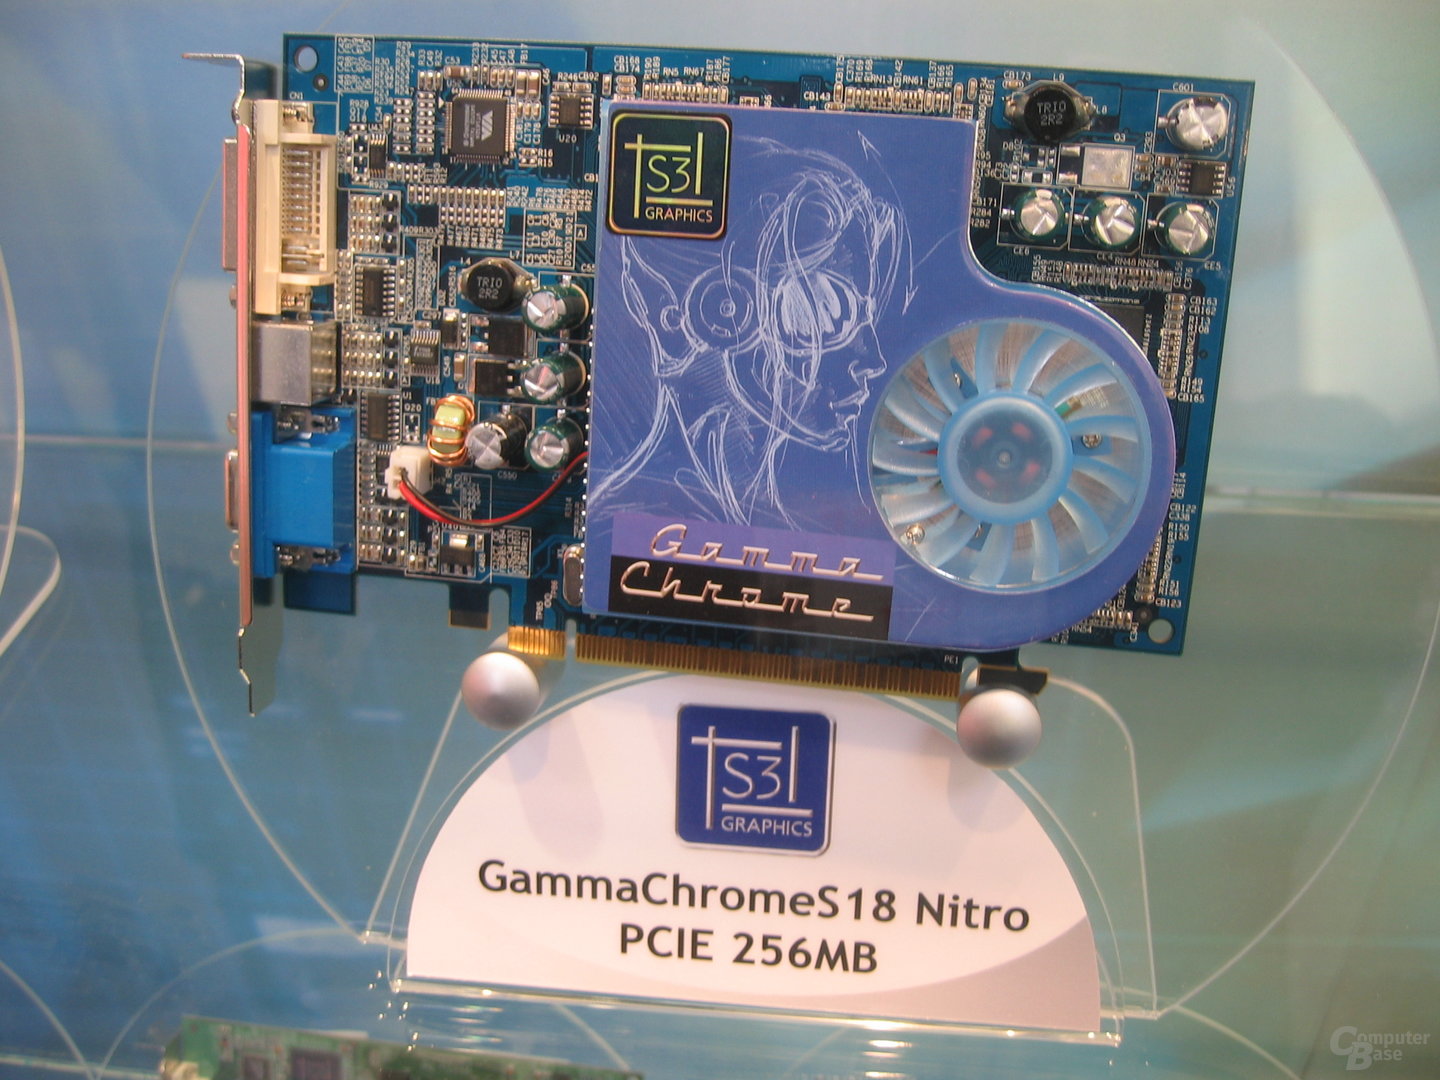 S3 Graphics GammaChrome S8 Nitro